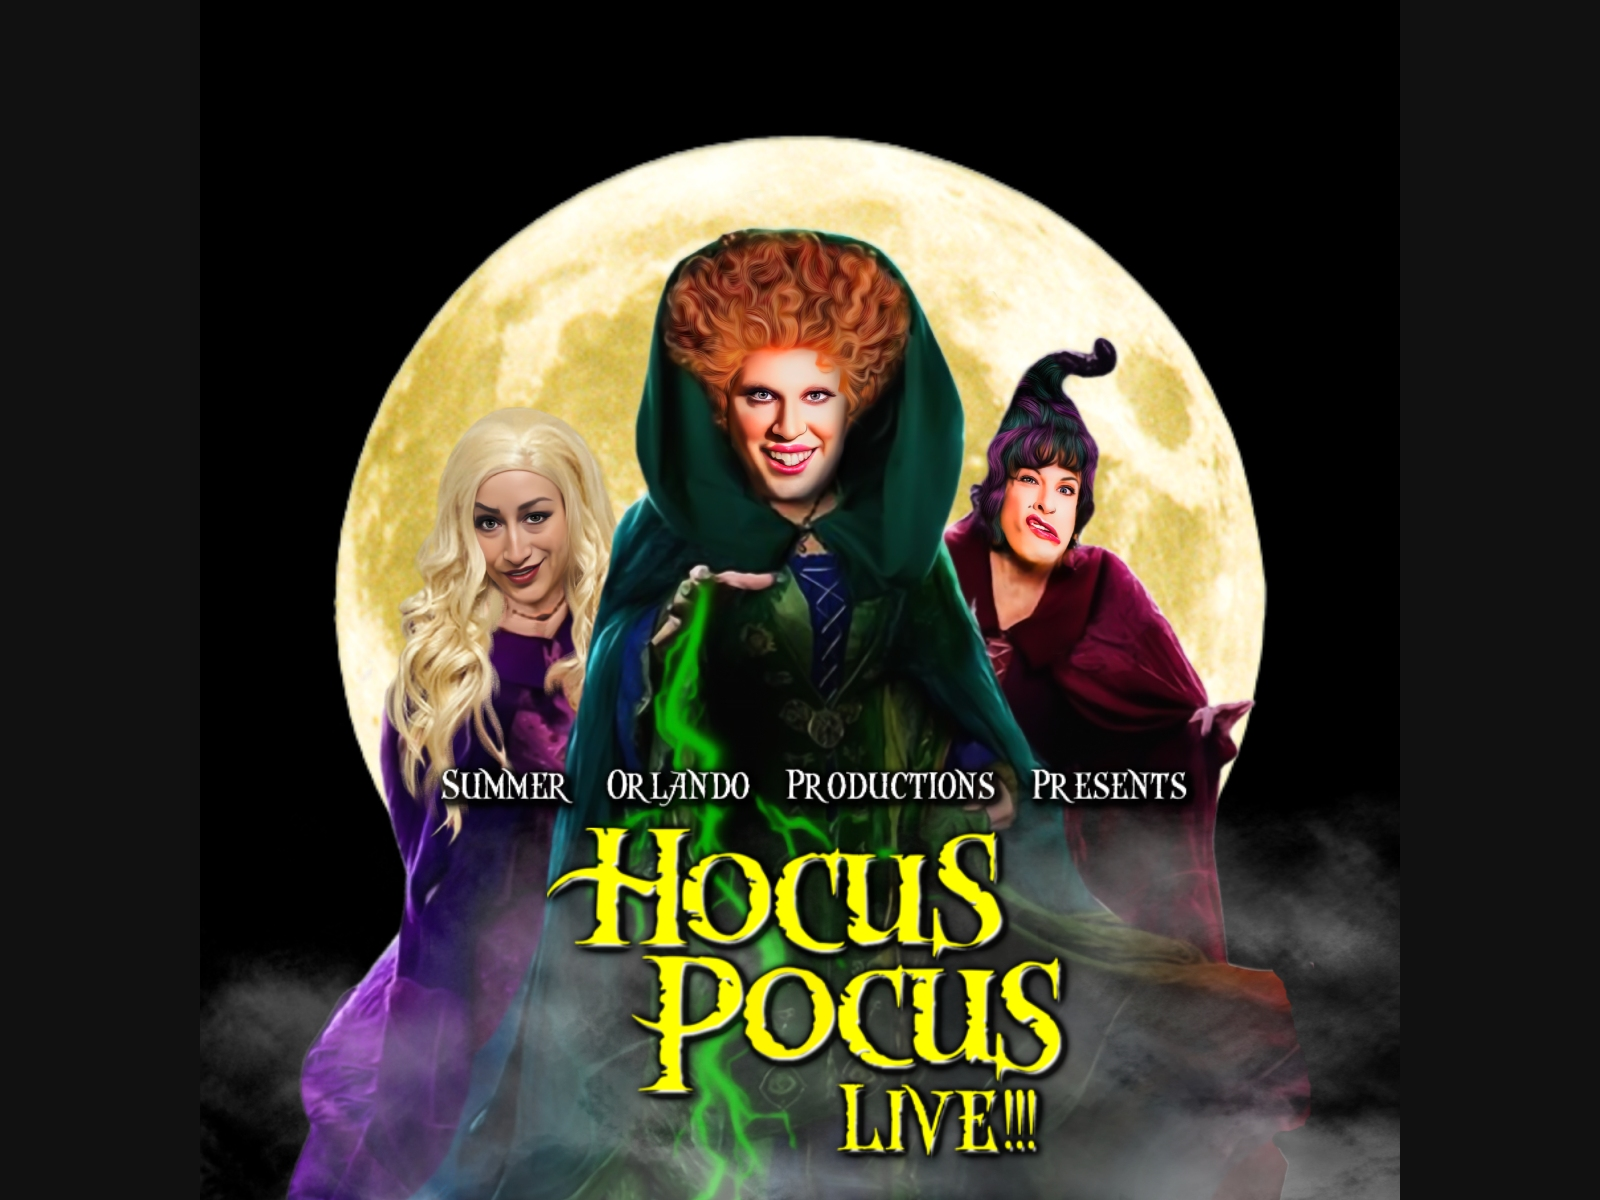 Summer Orlando Productions Announces CT Tour of "Hocus Pocus Live"